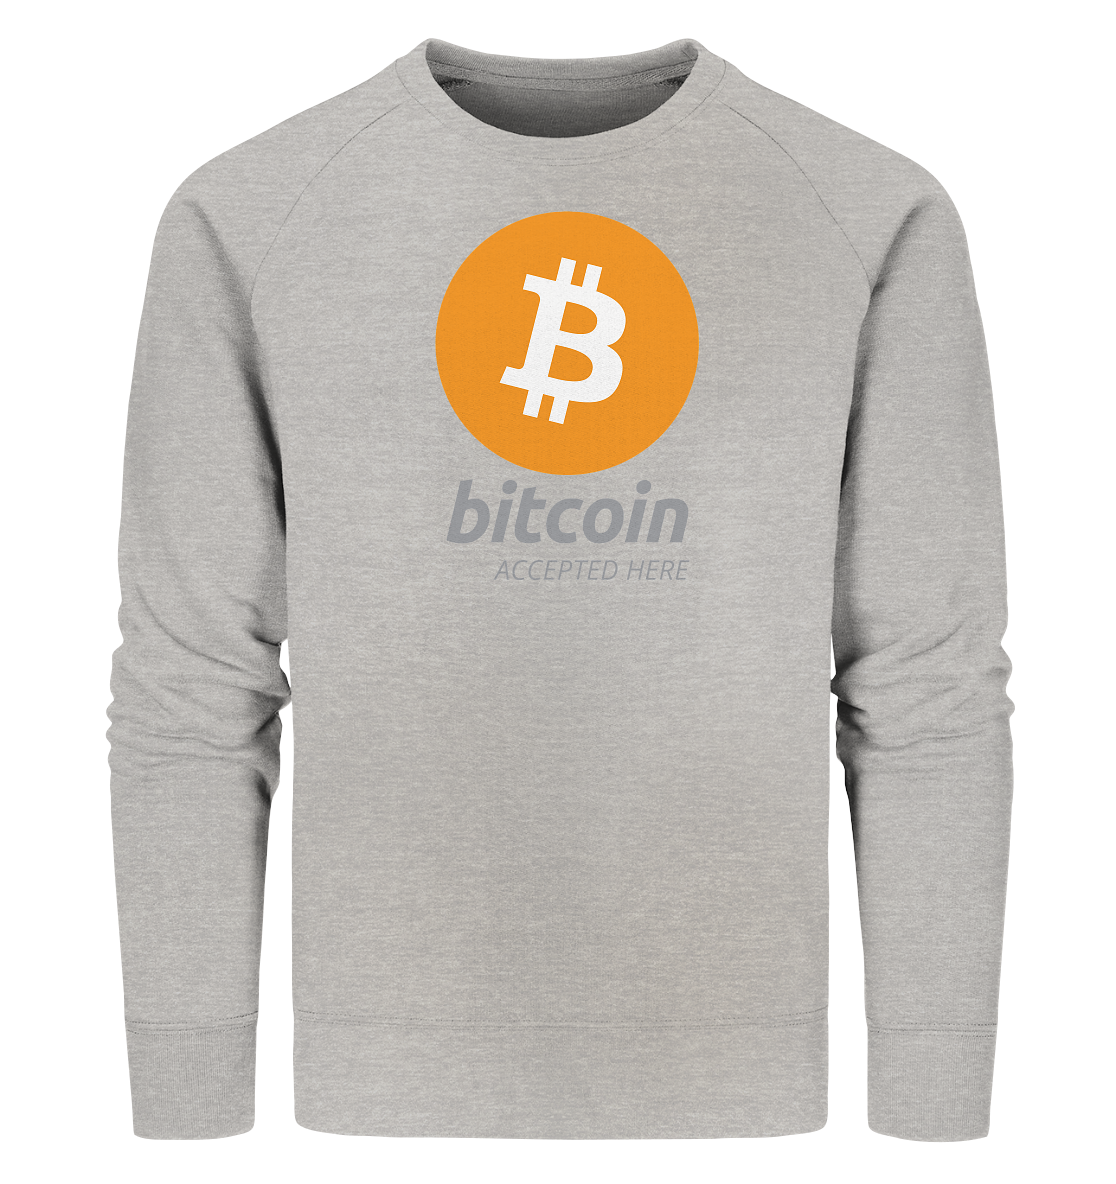 Bitcoin accepted here - Organic Sweatshirt